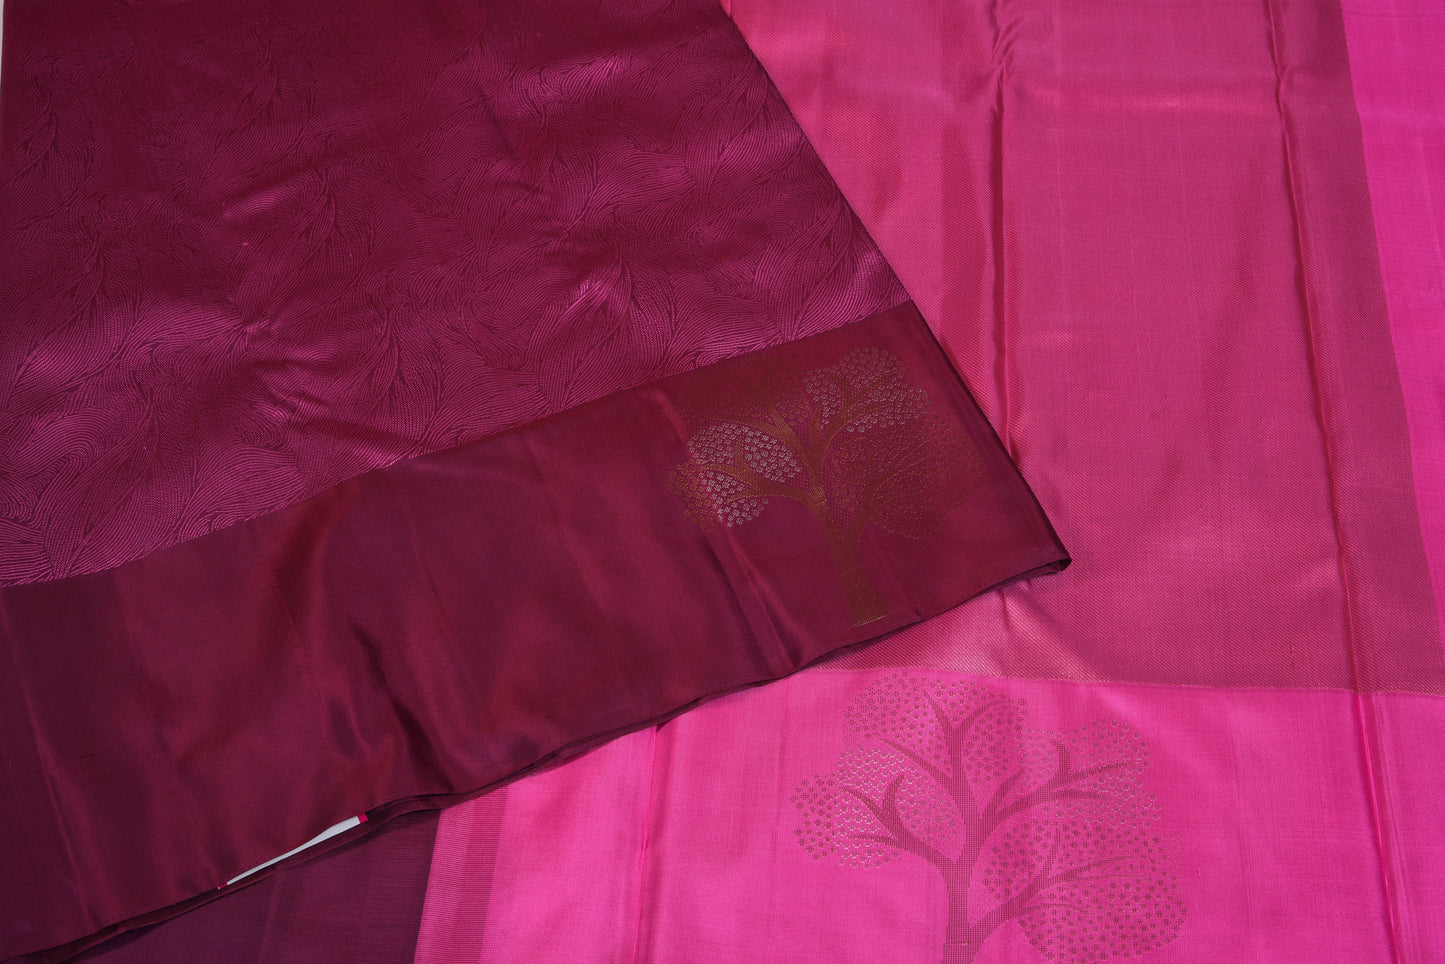 Weaved Rosy silk saree with fuchsia coloured long border